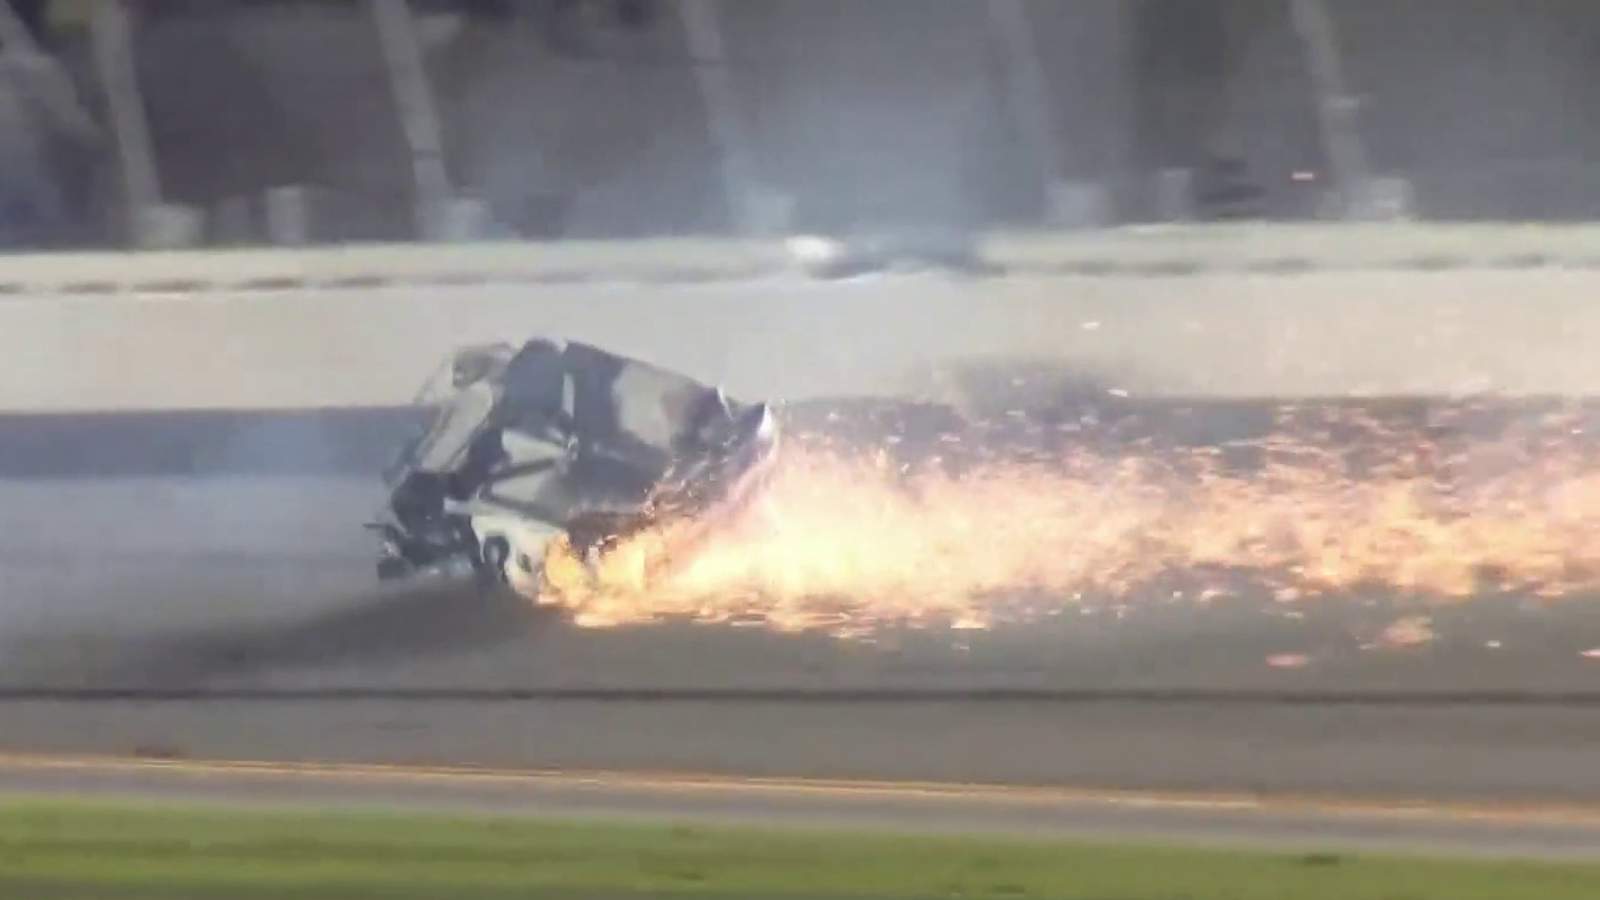 Ryan Newman awake, speaking with family after fiery crash at Daytona 500